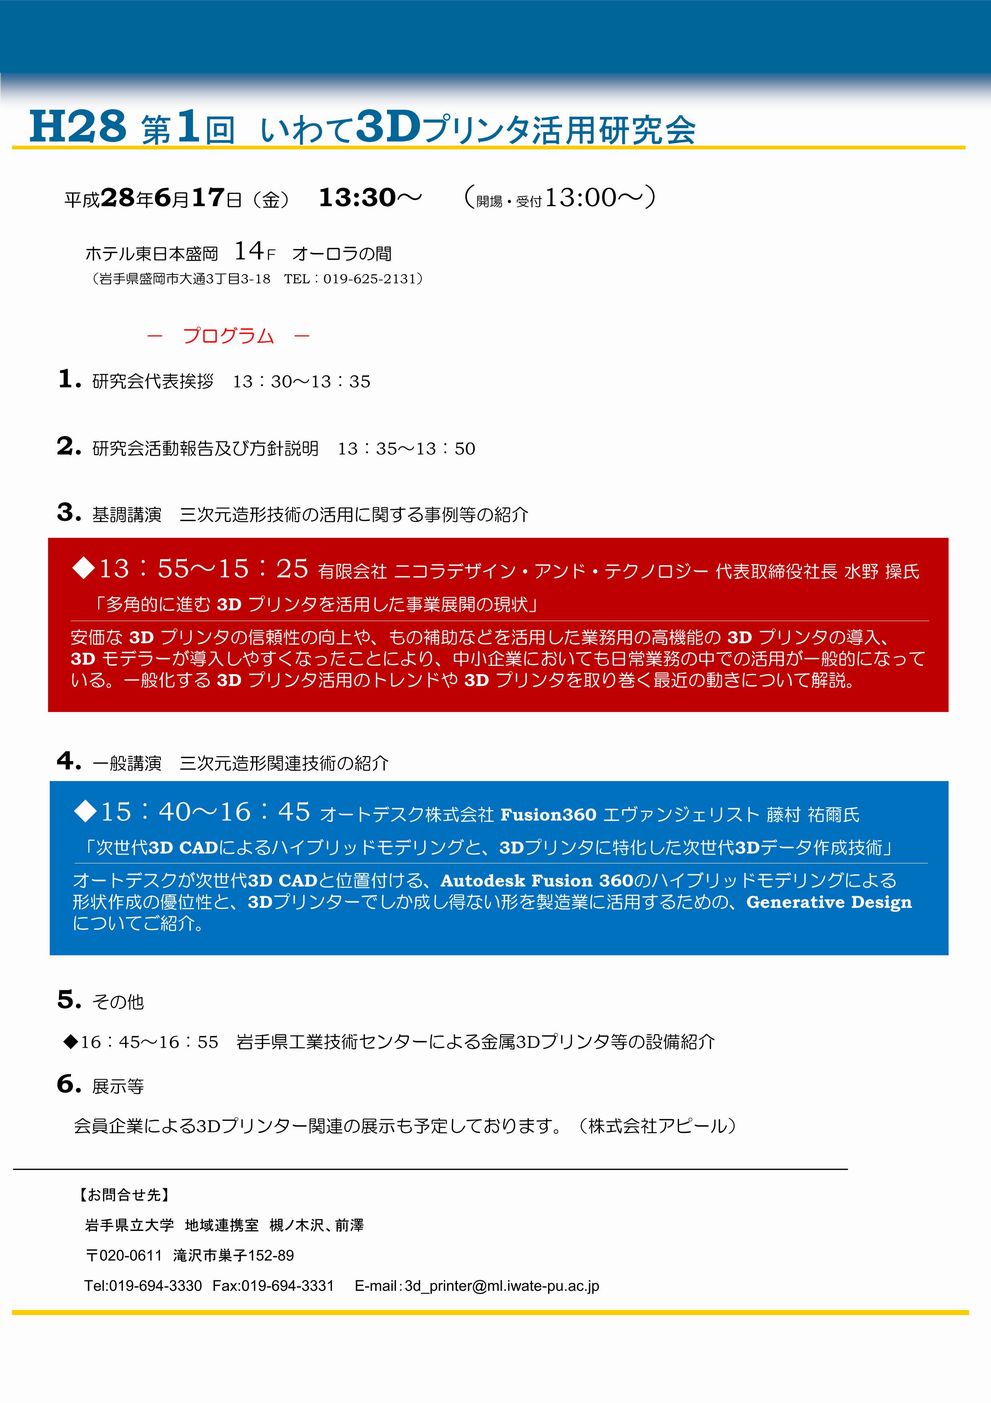 http://www.iwate-pu.ac.jp/contribution/28-3D-1.jpg